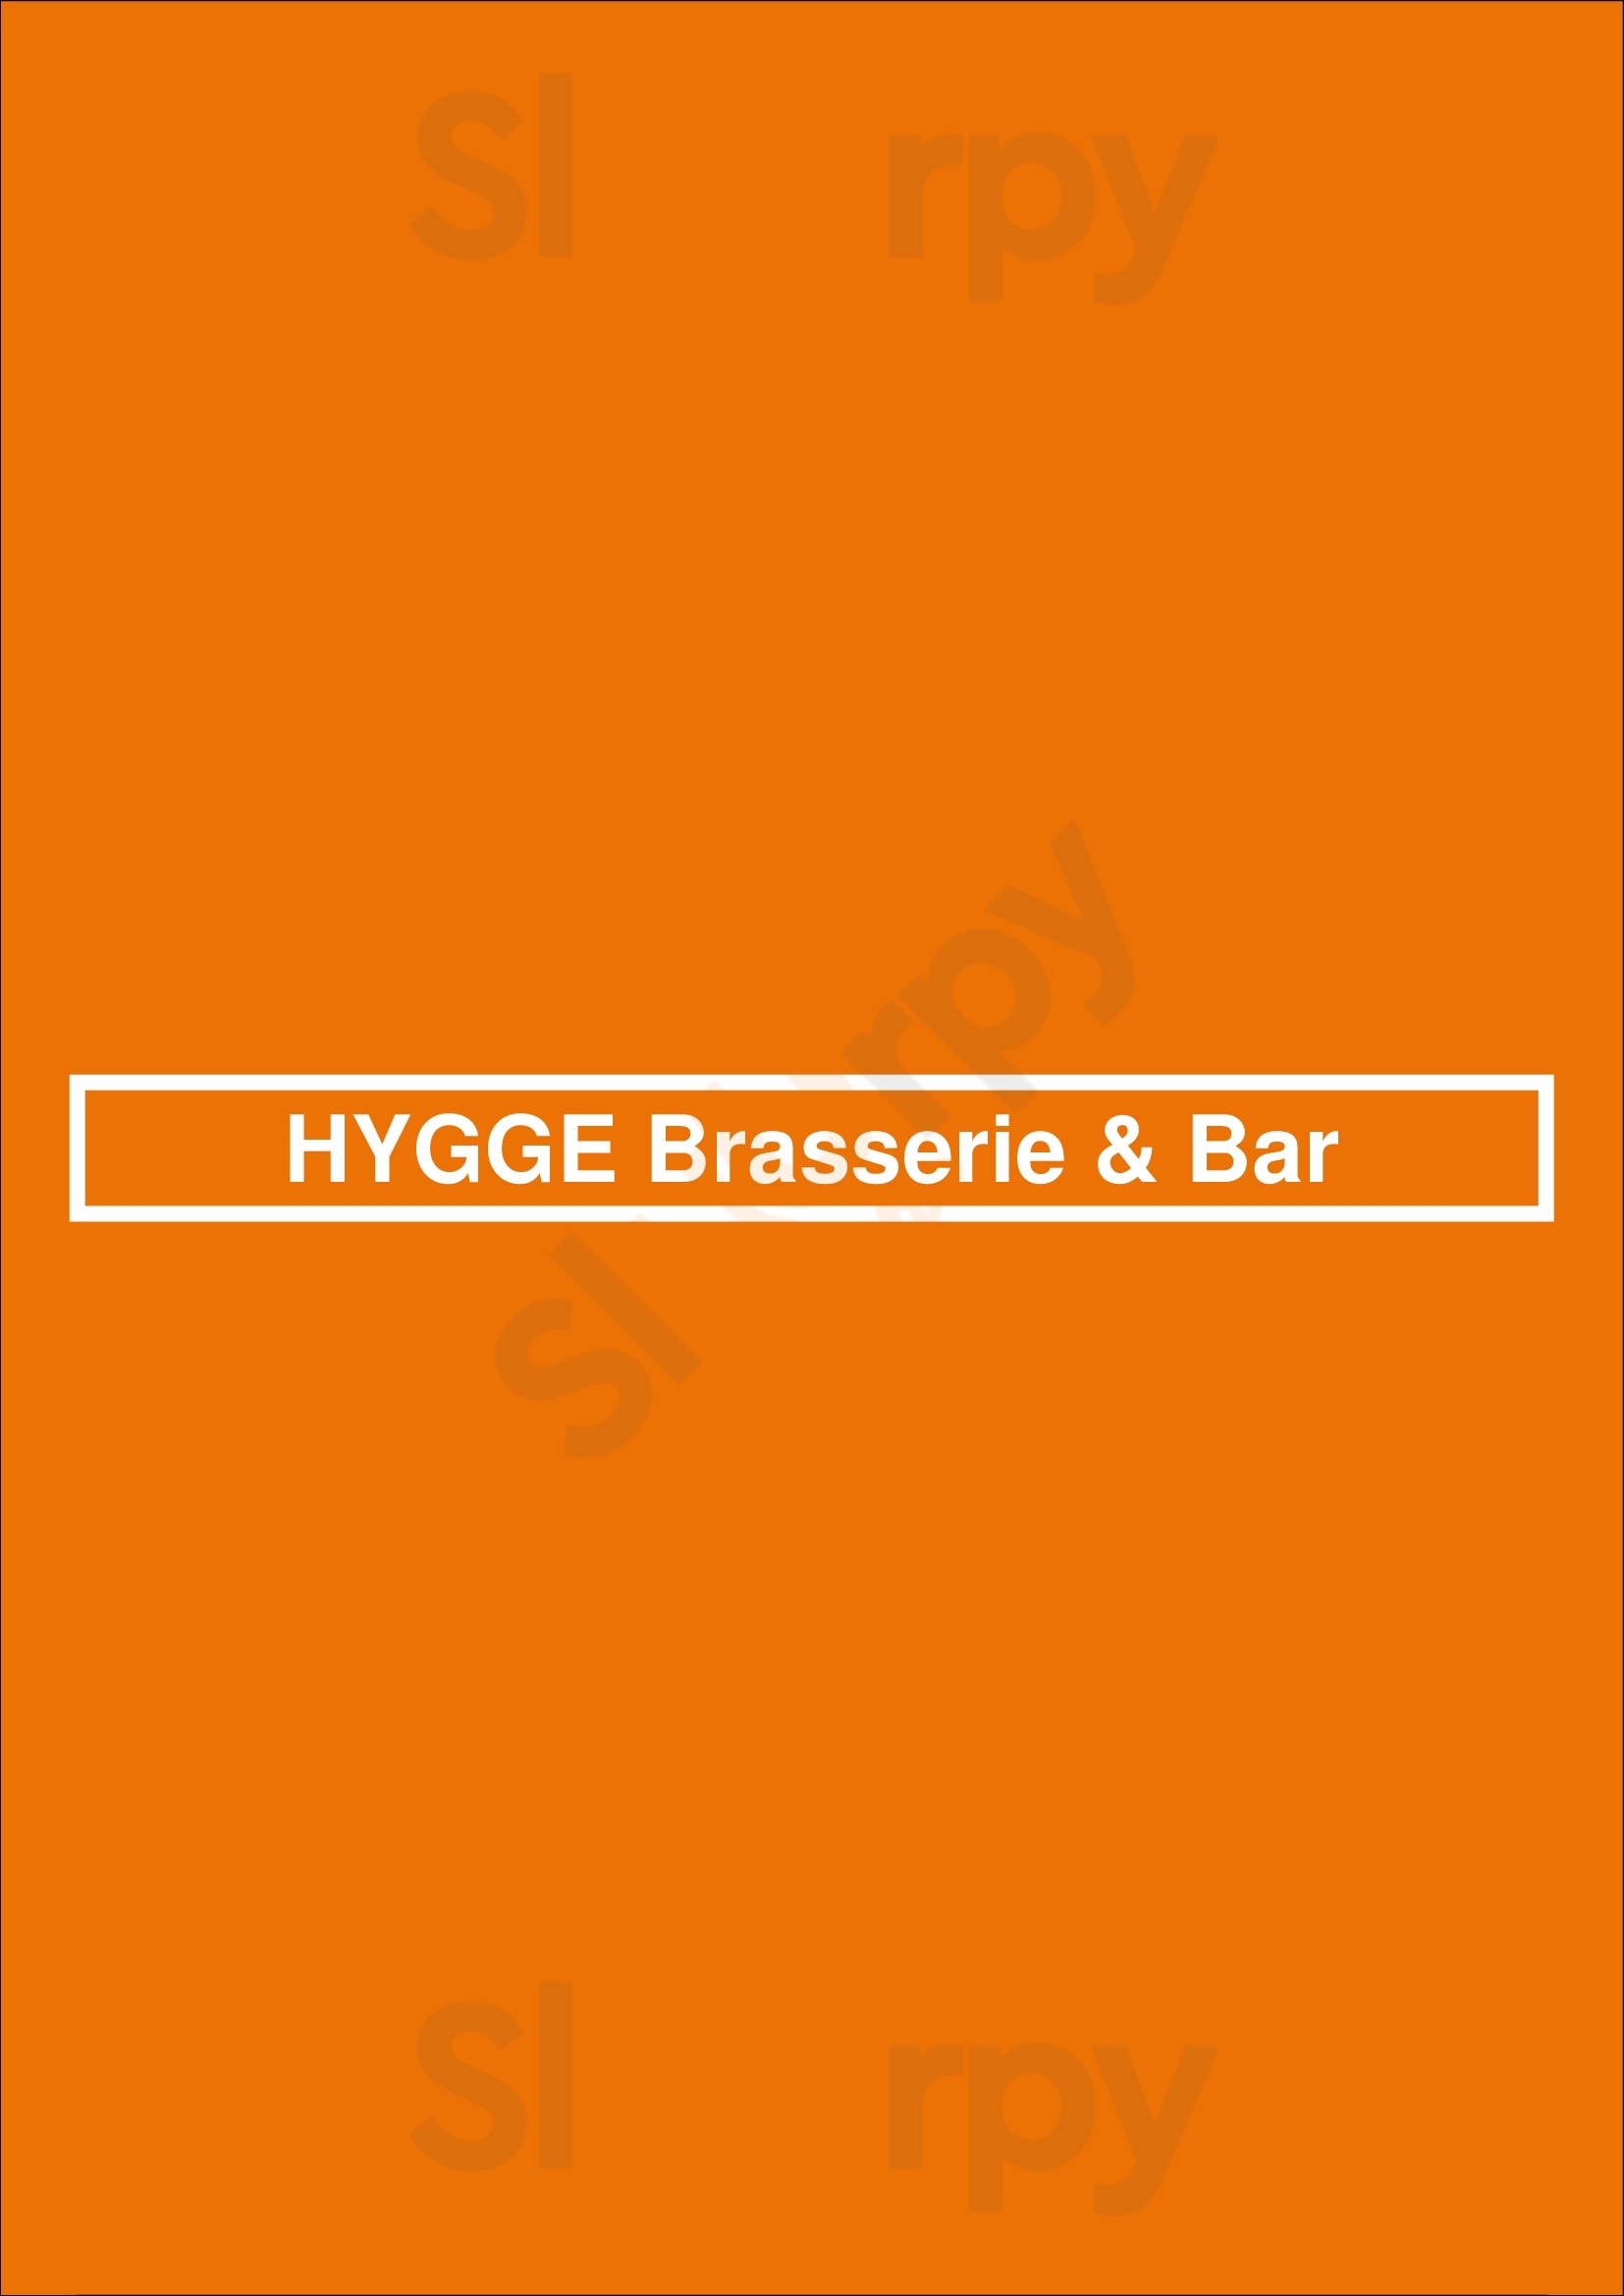 Hygge Brasserie & Bar Hamburg Menu - 1